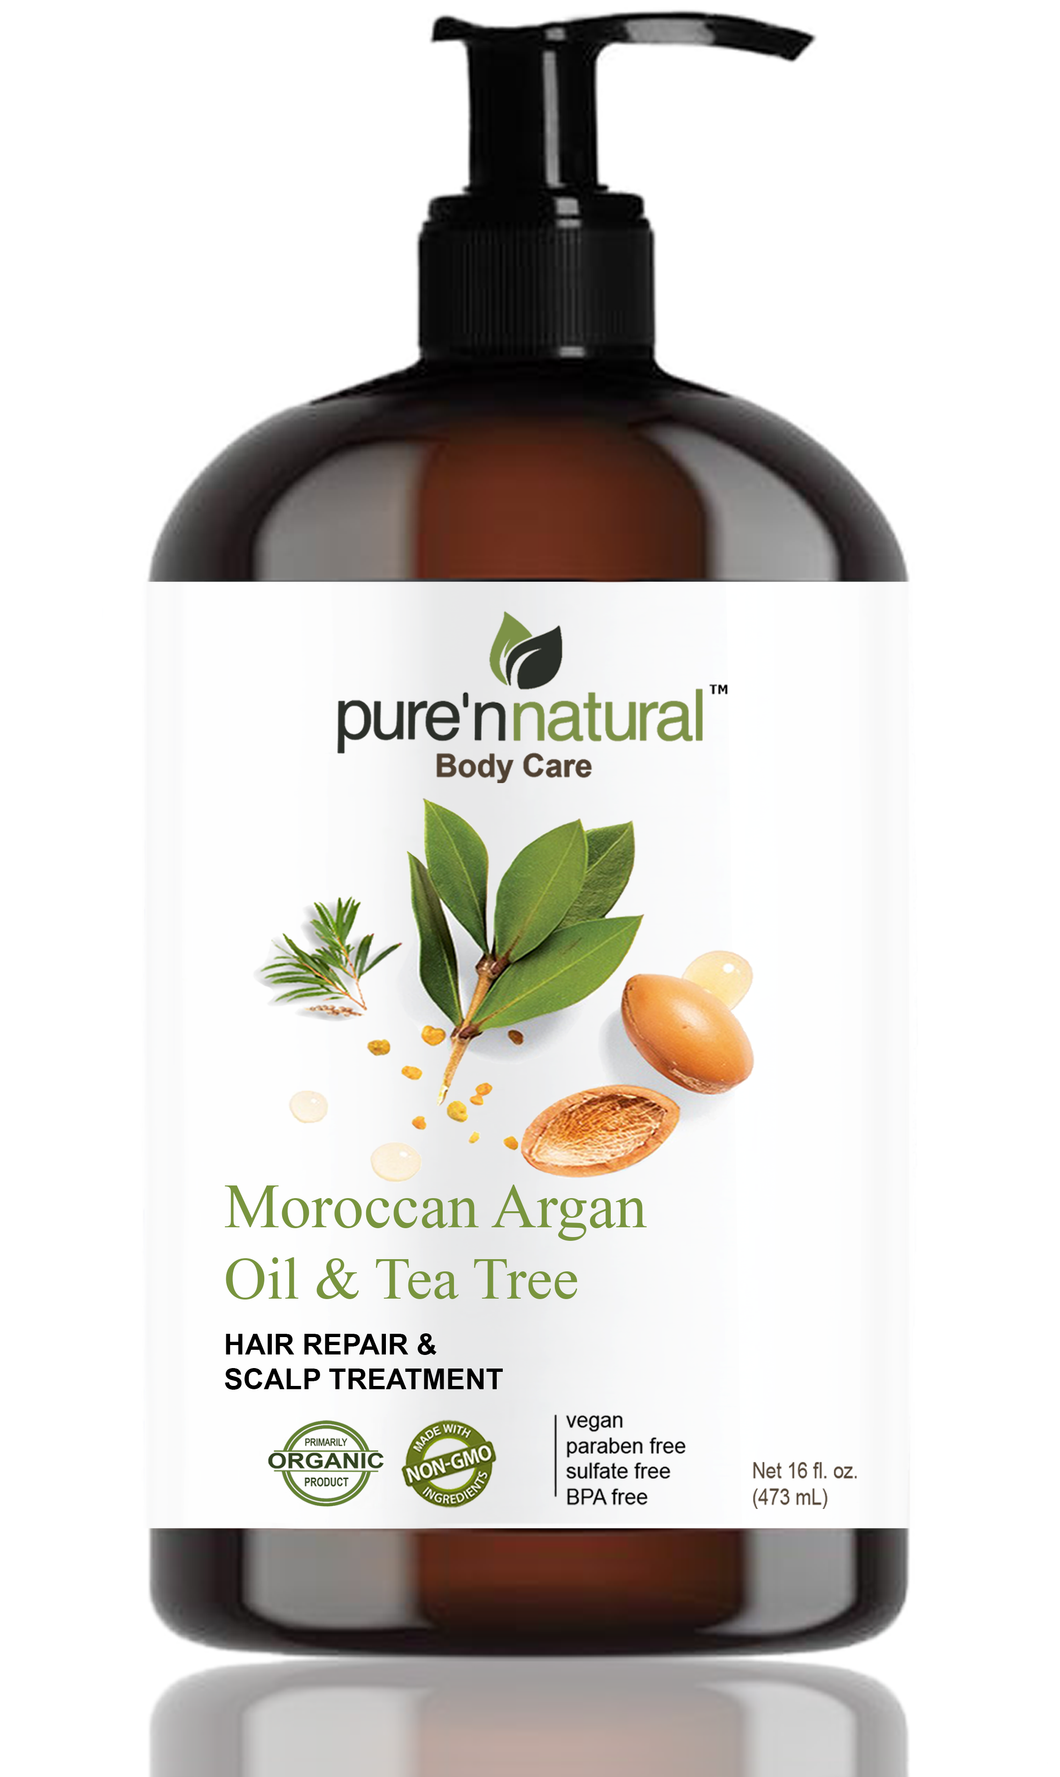 Moroccan Argan Oil & Tea Tree Hair Repair & Scalp Treatment (for her)